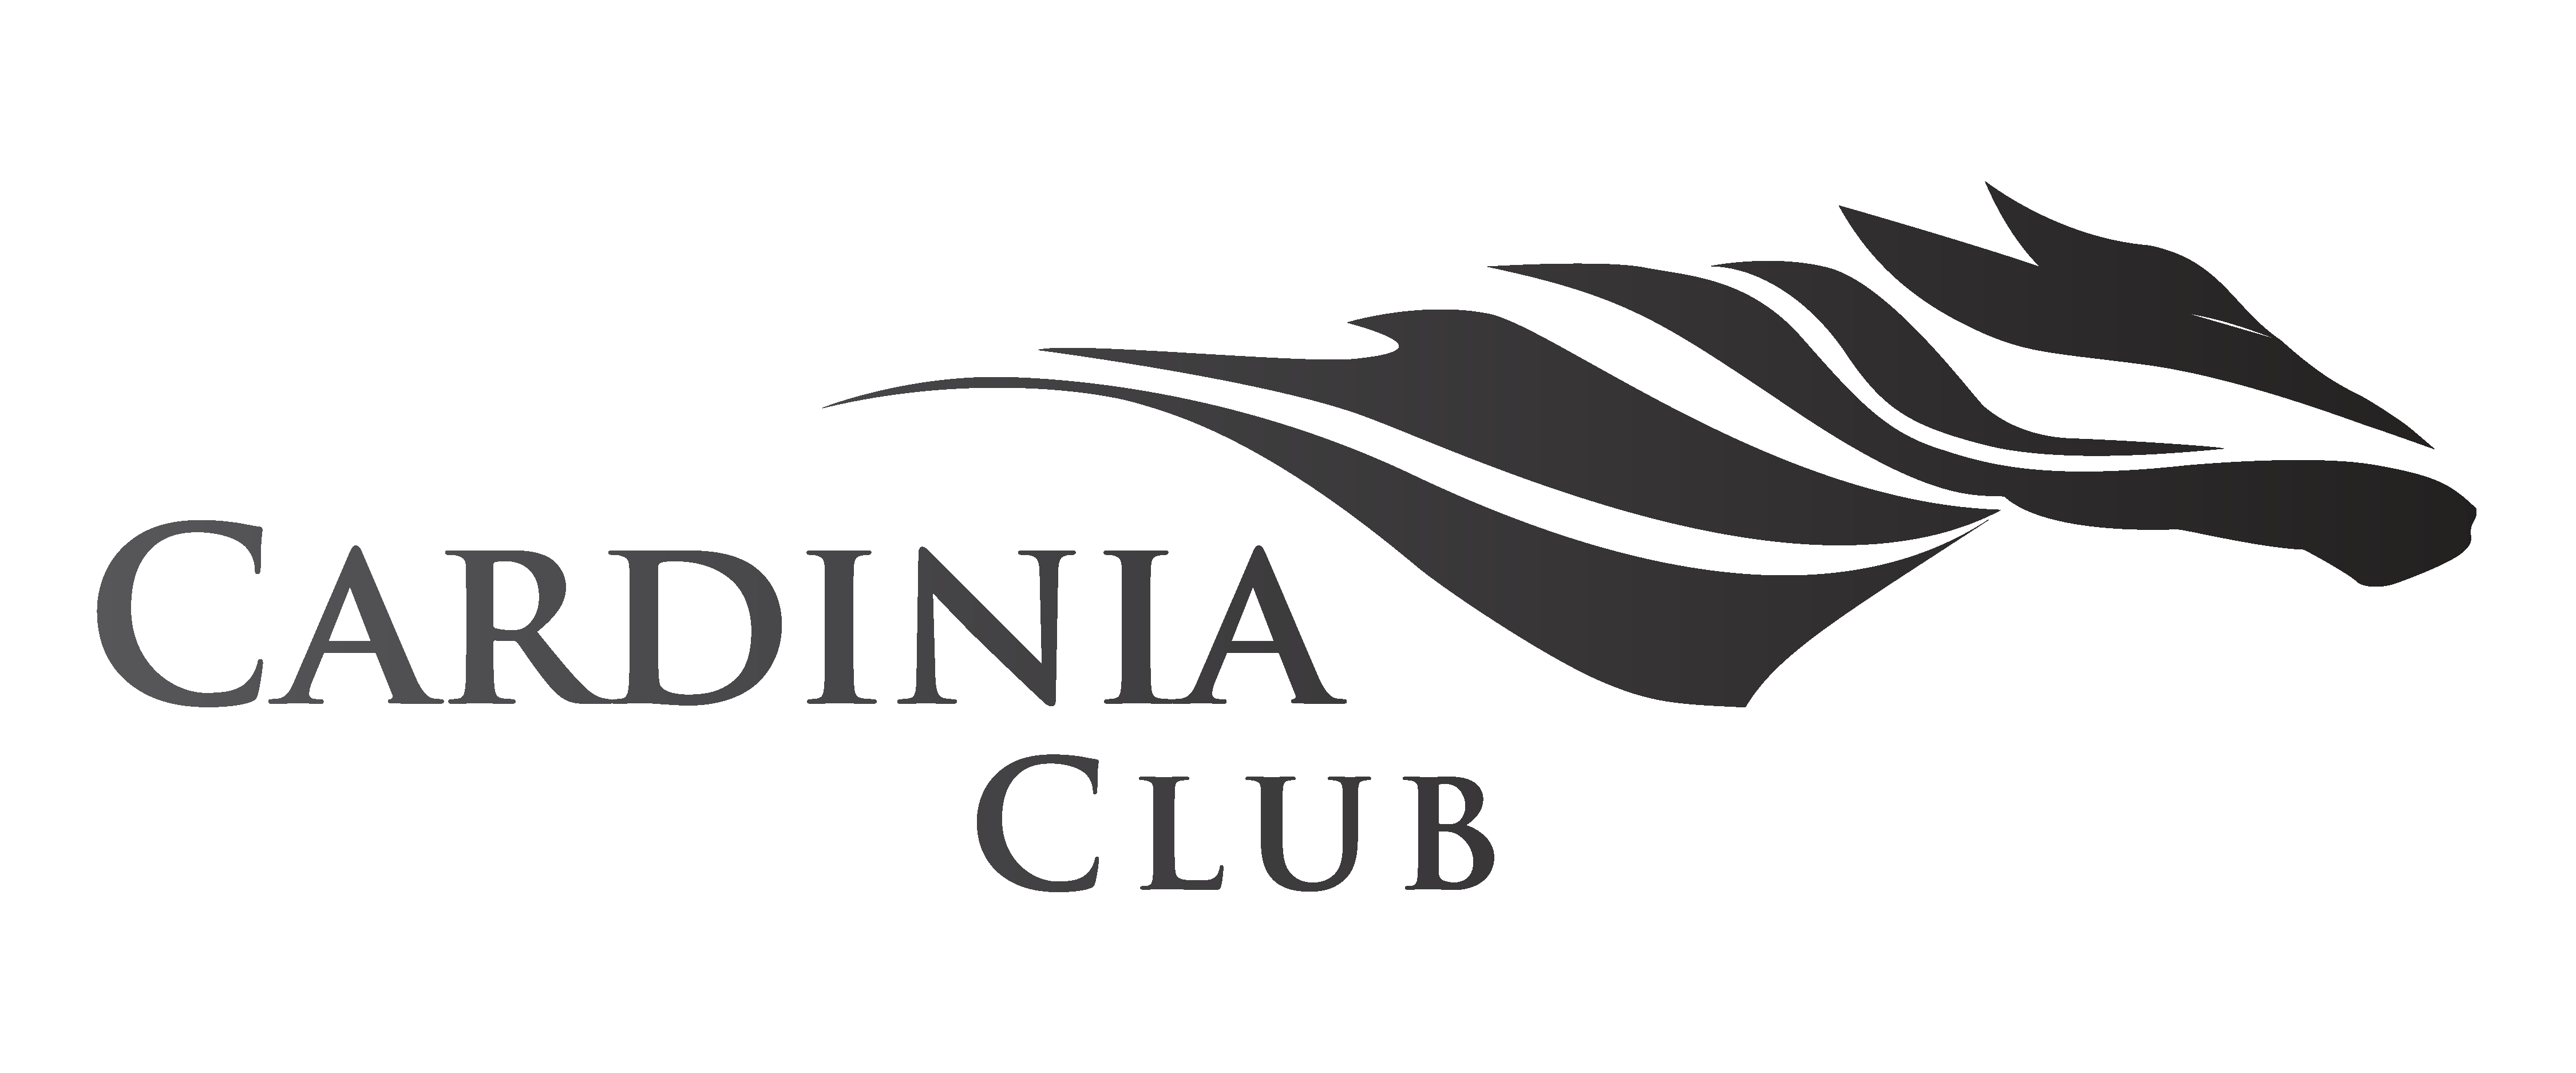 Cardinia Club